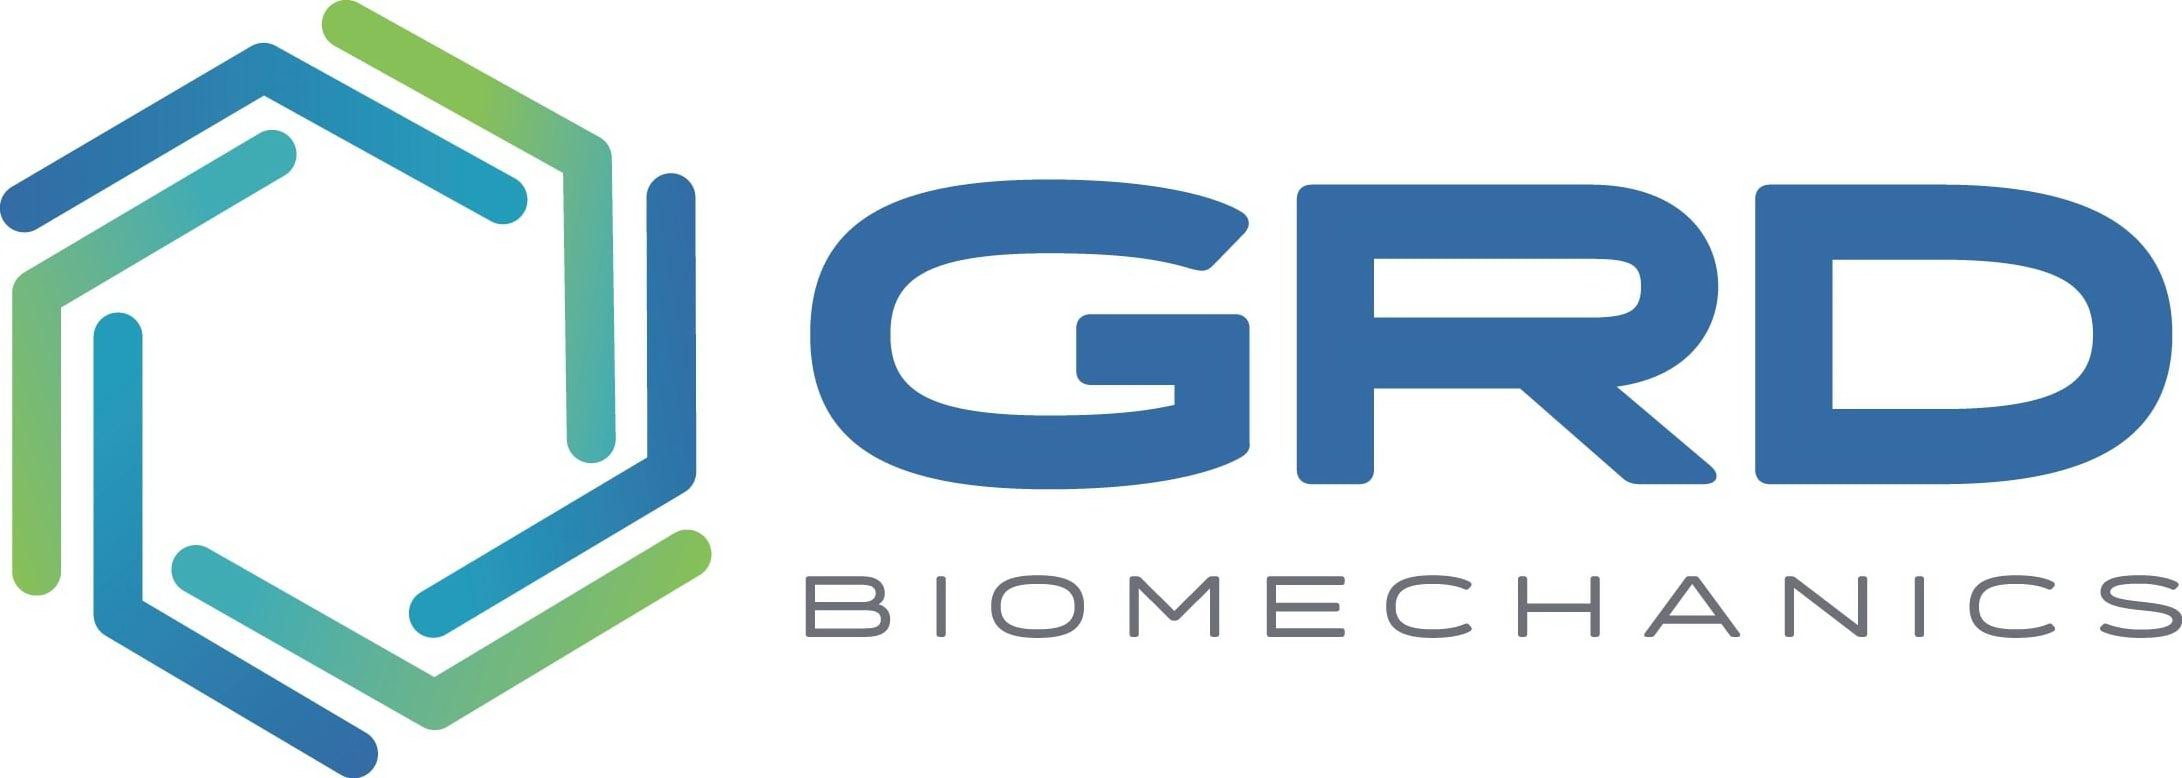 GRD BIOMECHANICS - GRD Biomechanics, LLC Trademark Registration